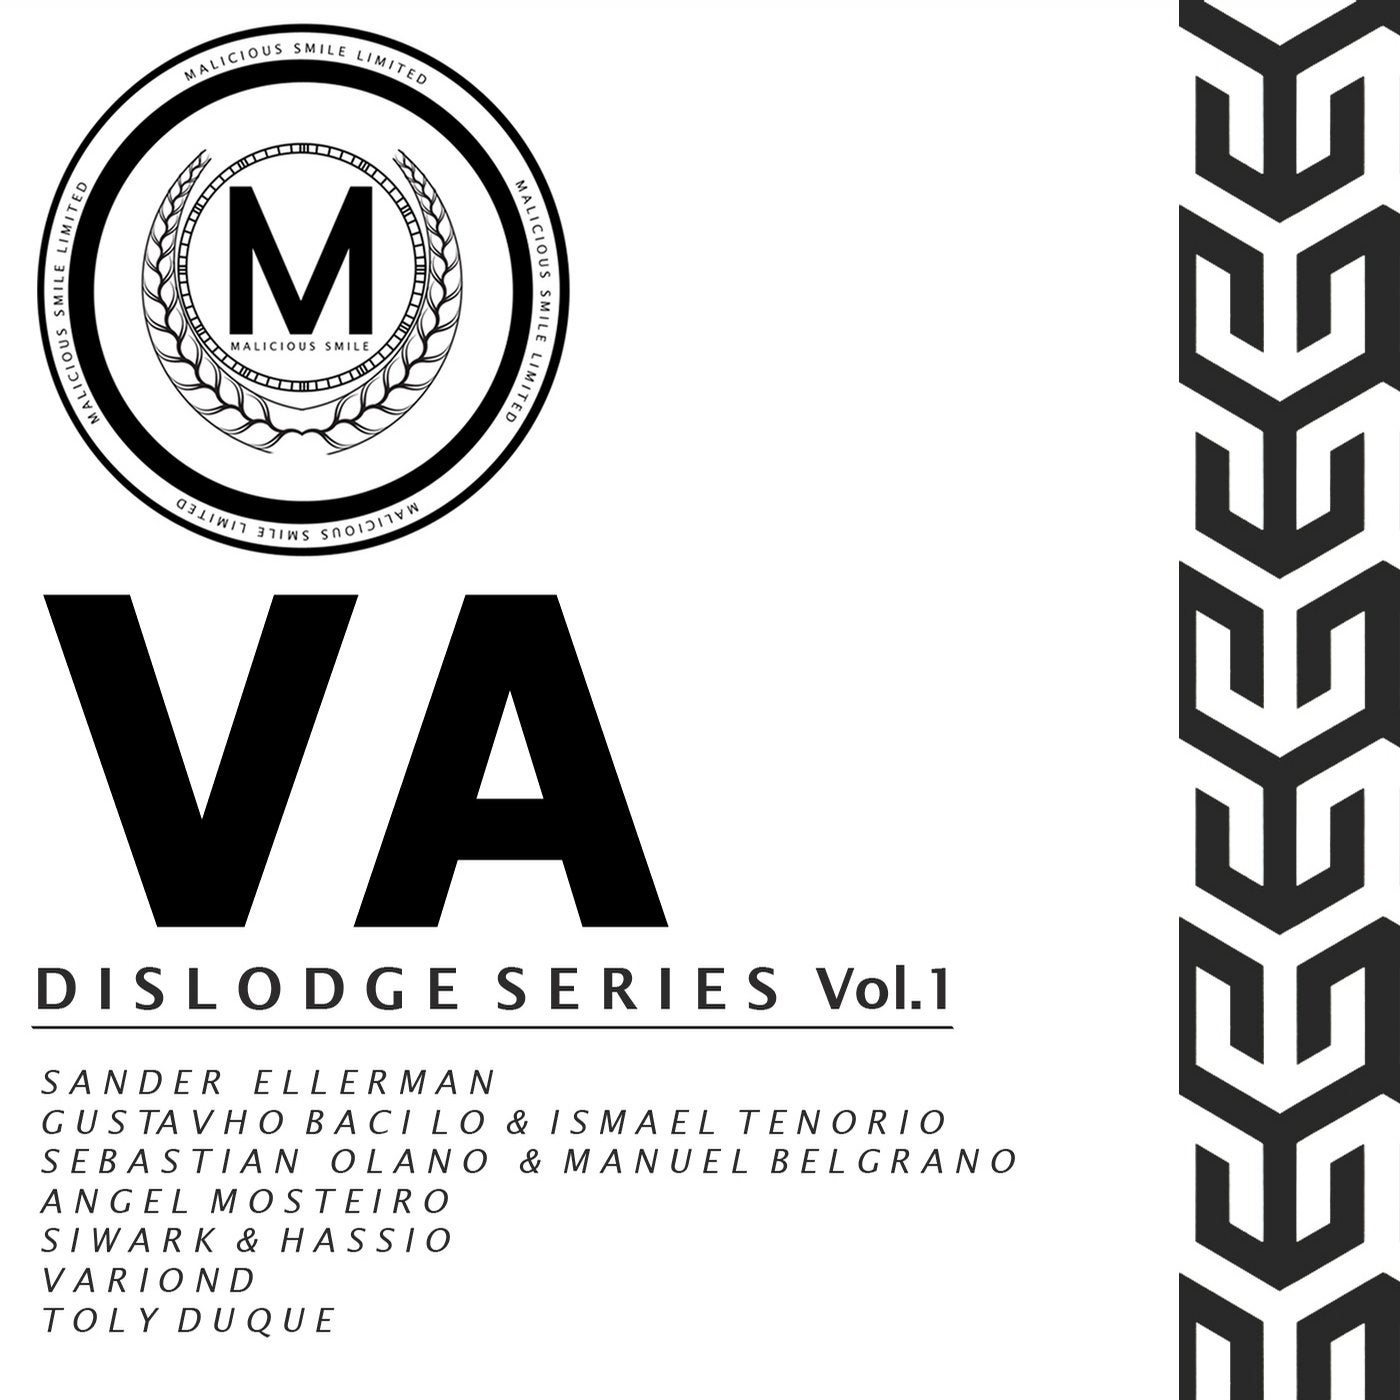 Dislodge Series Vol.1